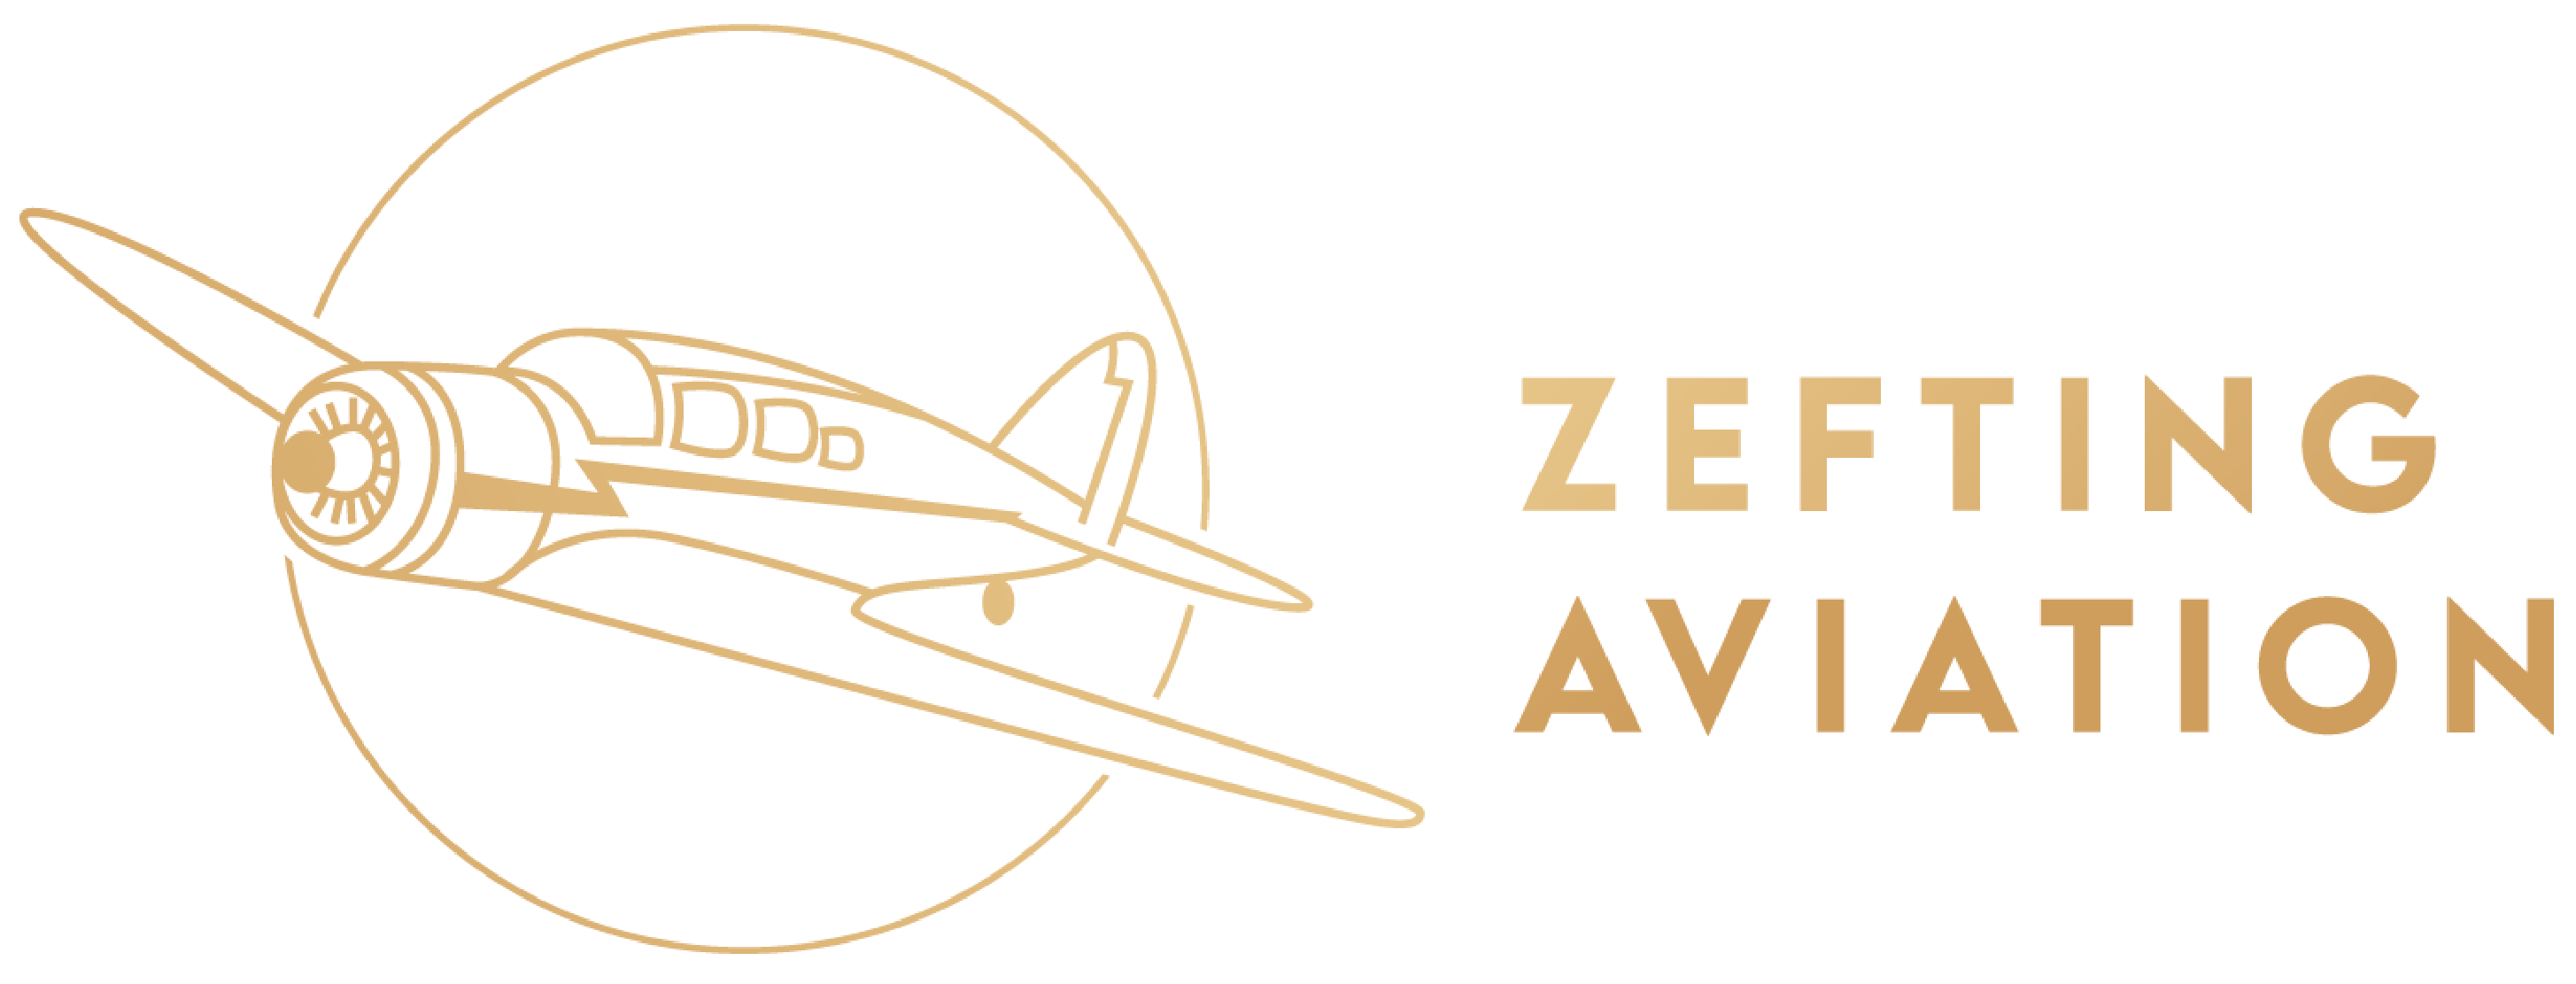 Zefting Aviation